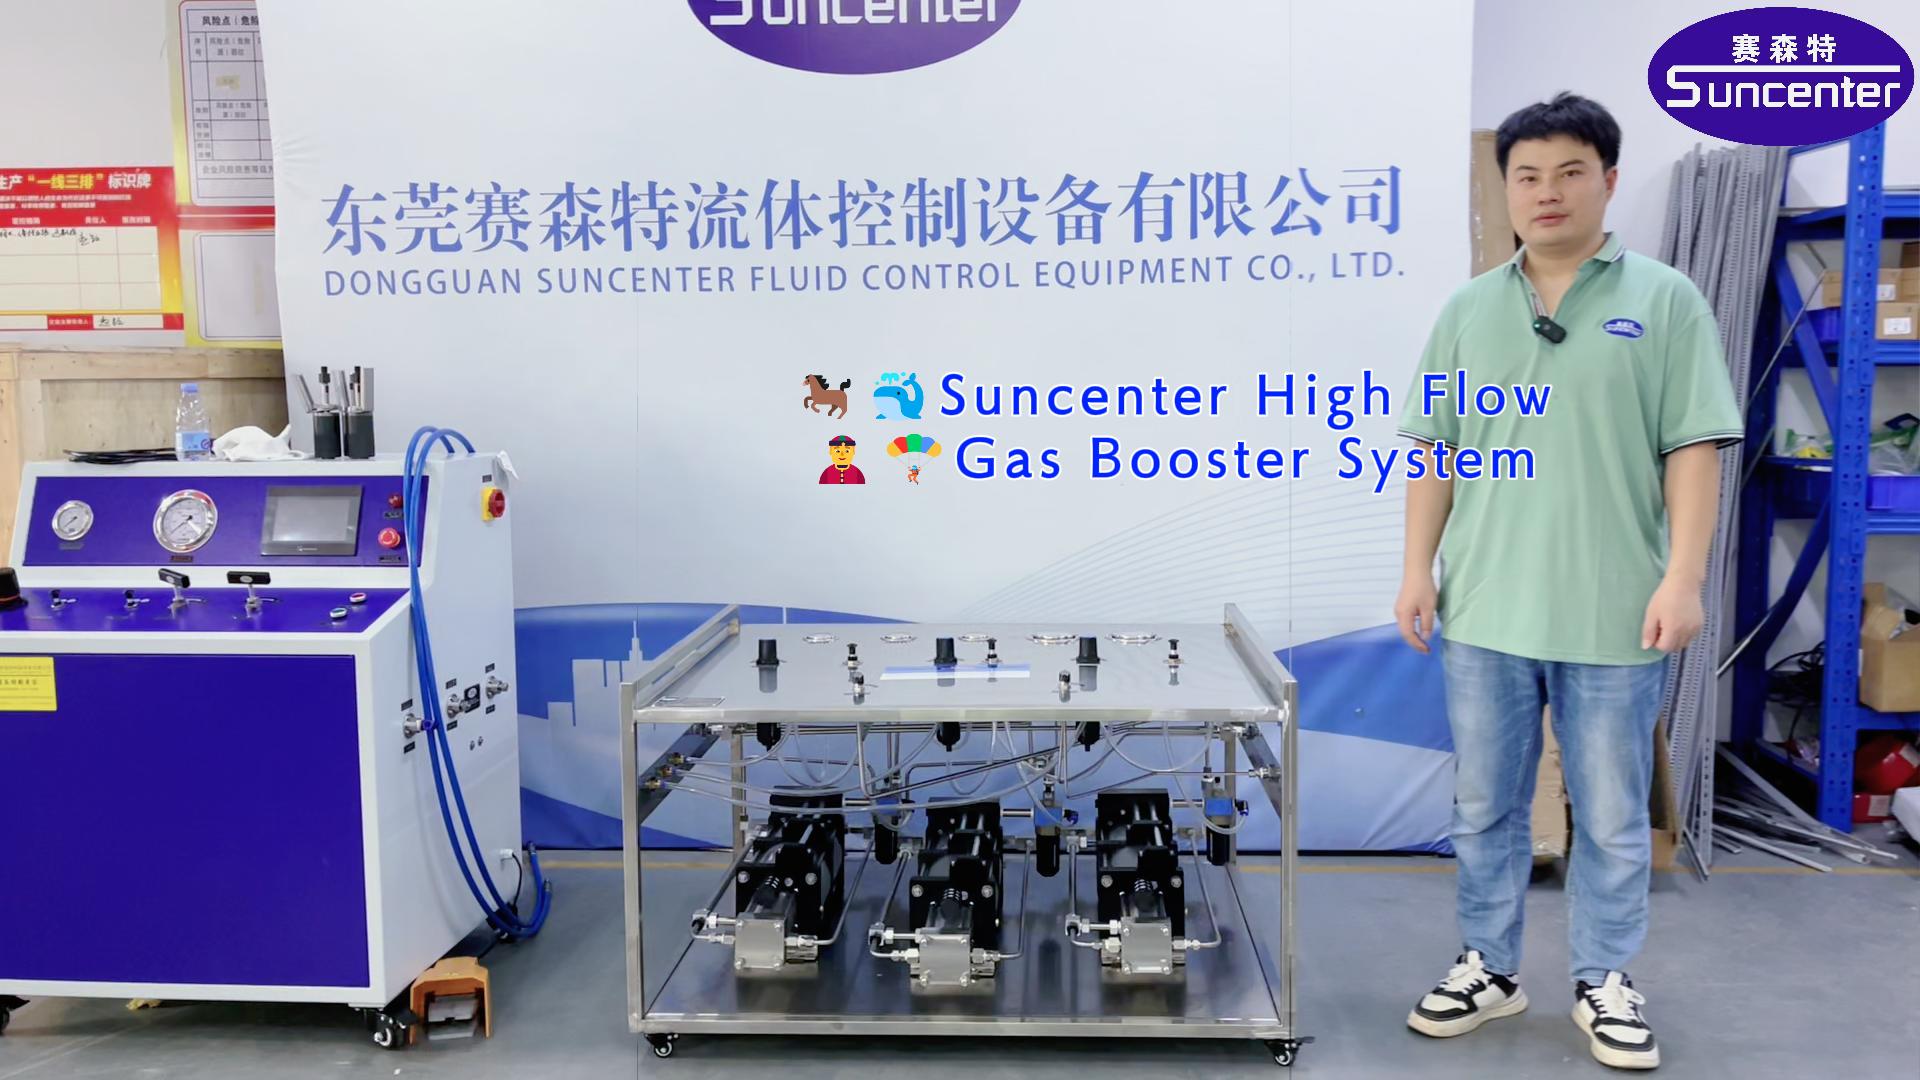 Suncenter High Flow Gas Booster System